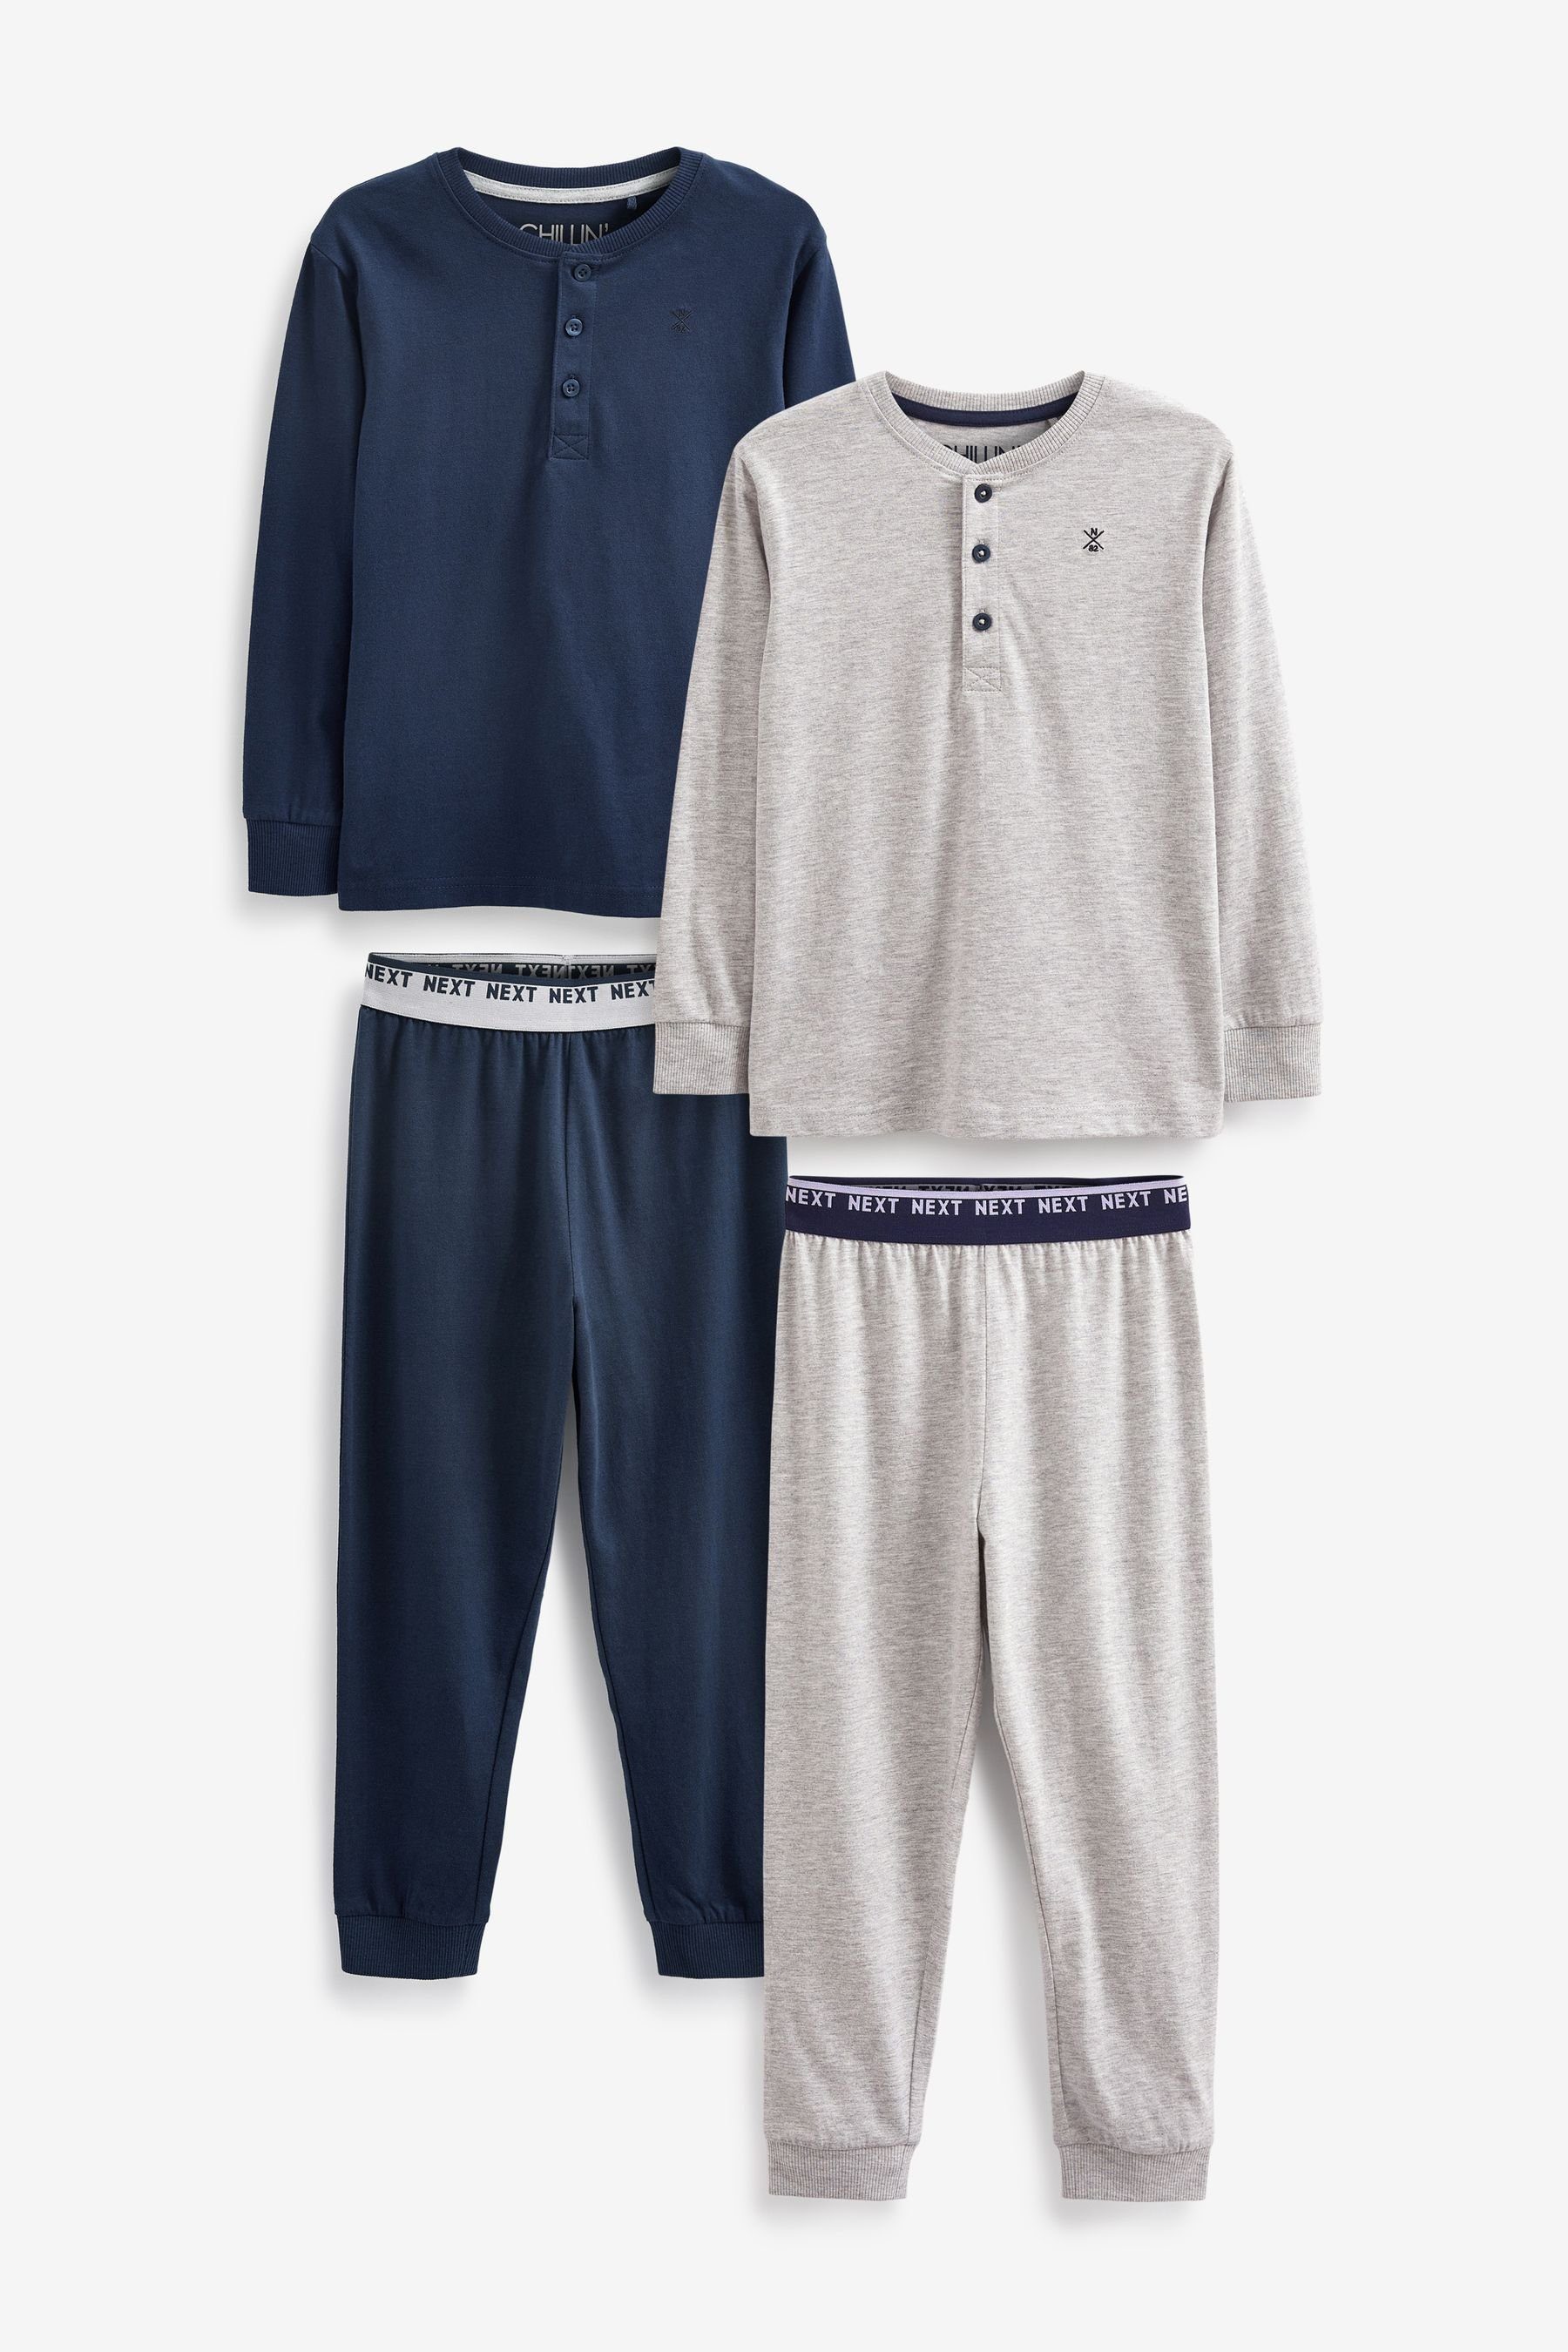 Next Pyjama Pyjamas im 2er-Pack (4 tlg) Navy Blue/Grey